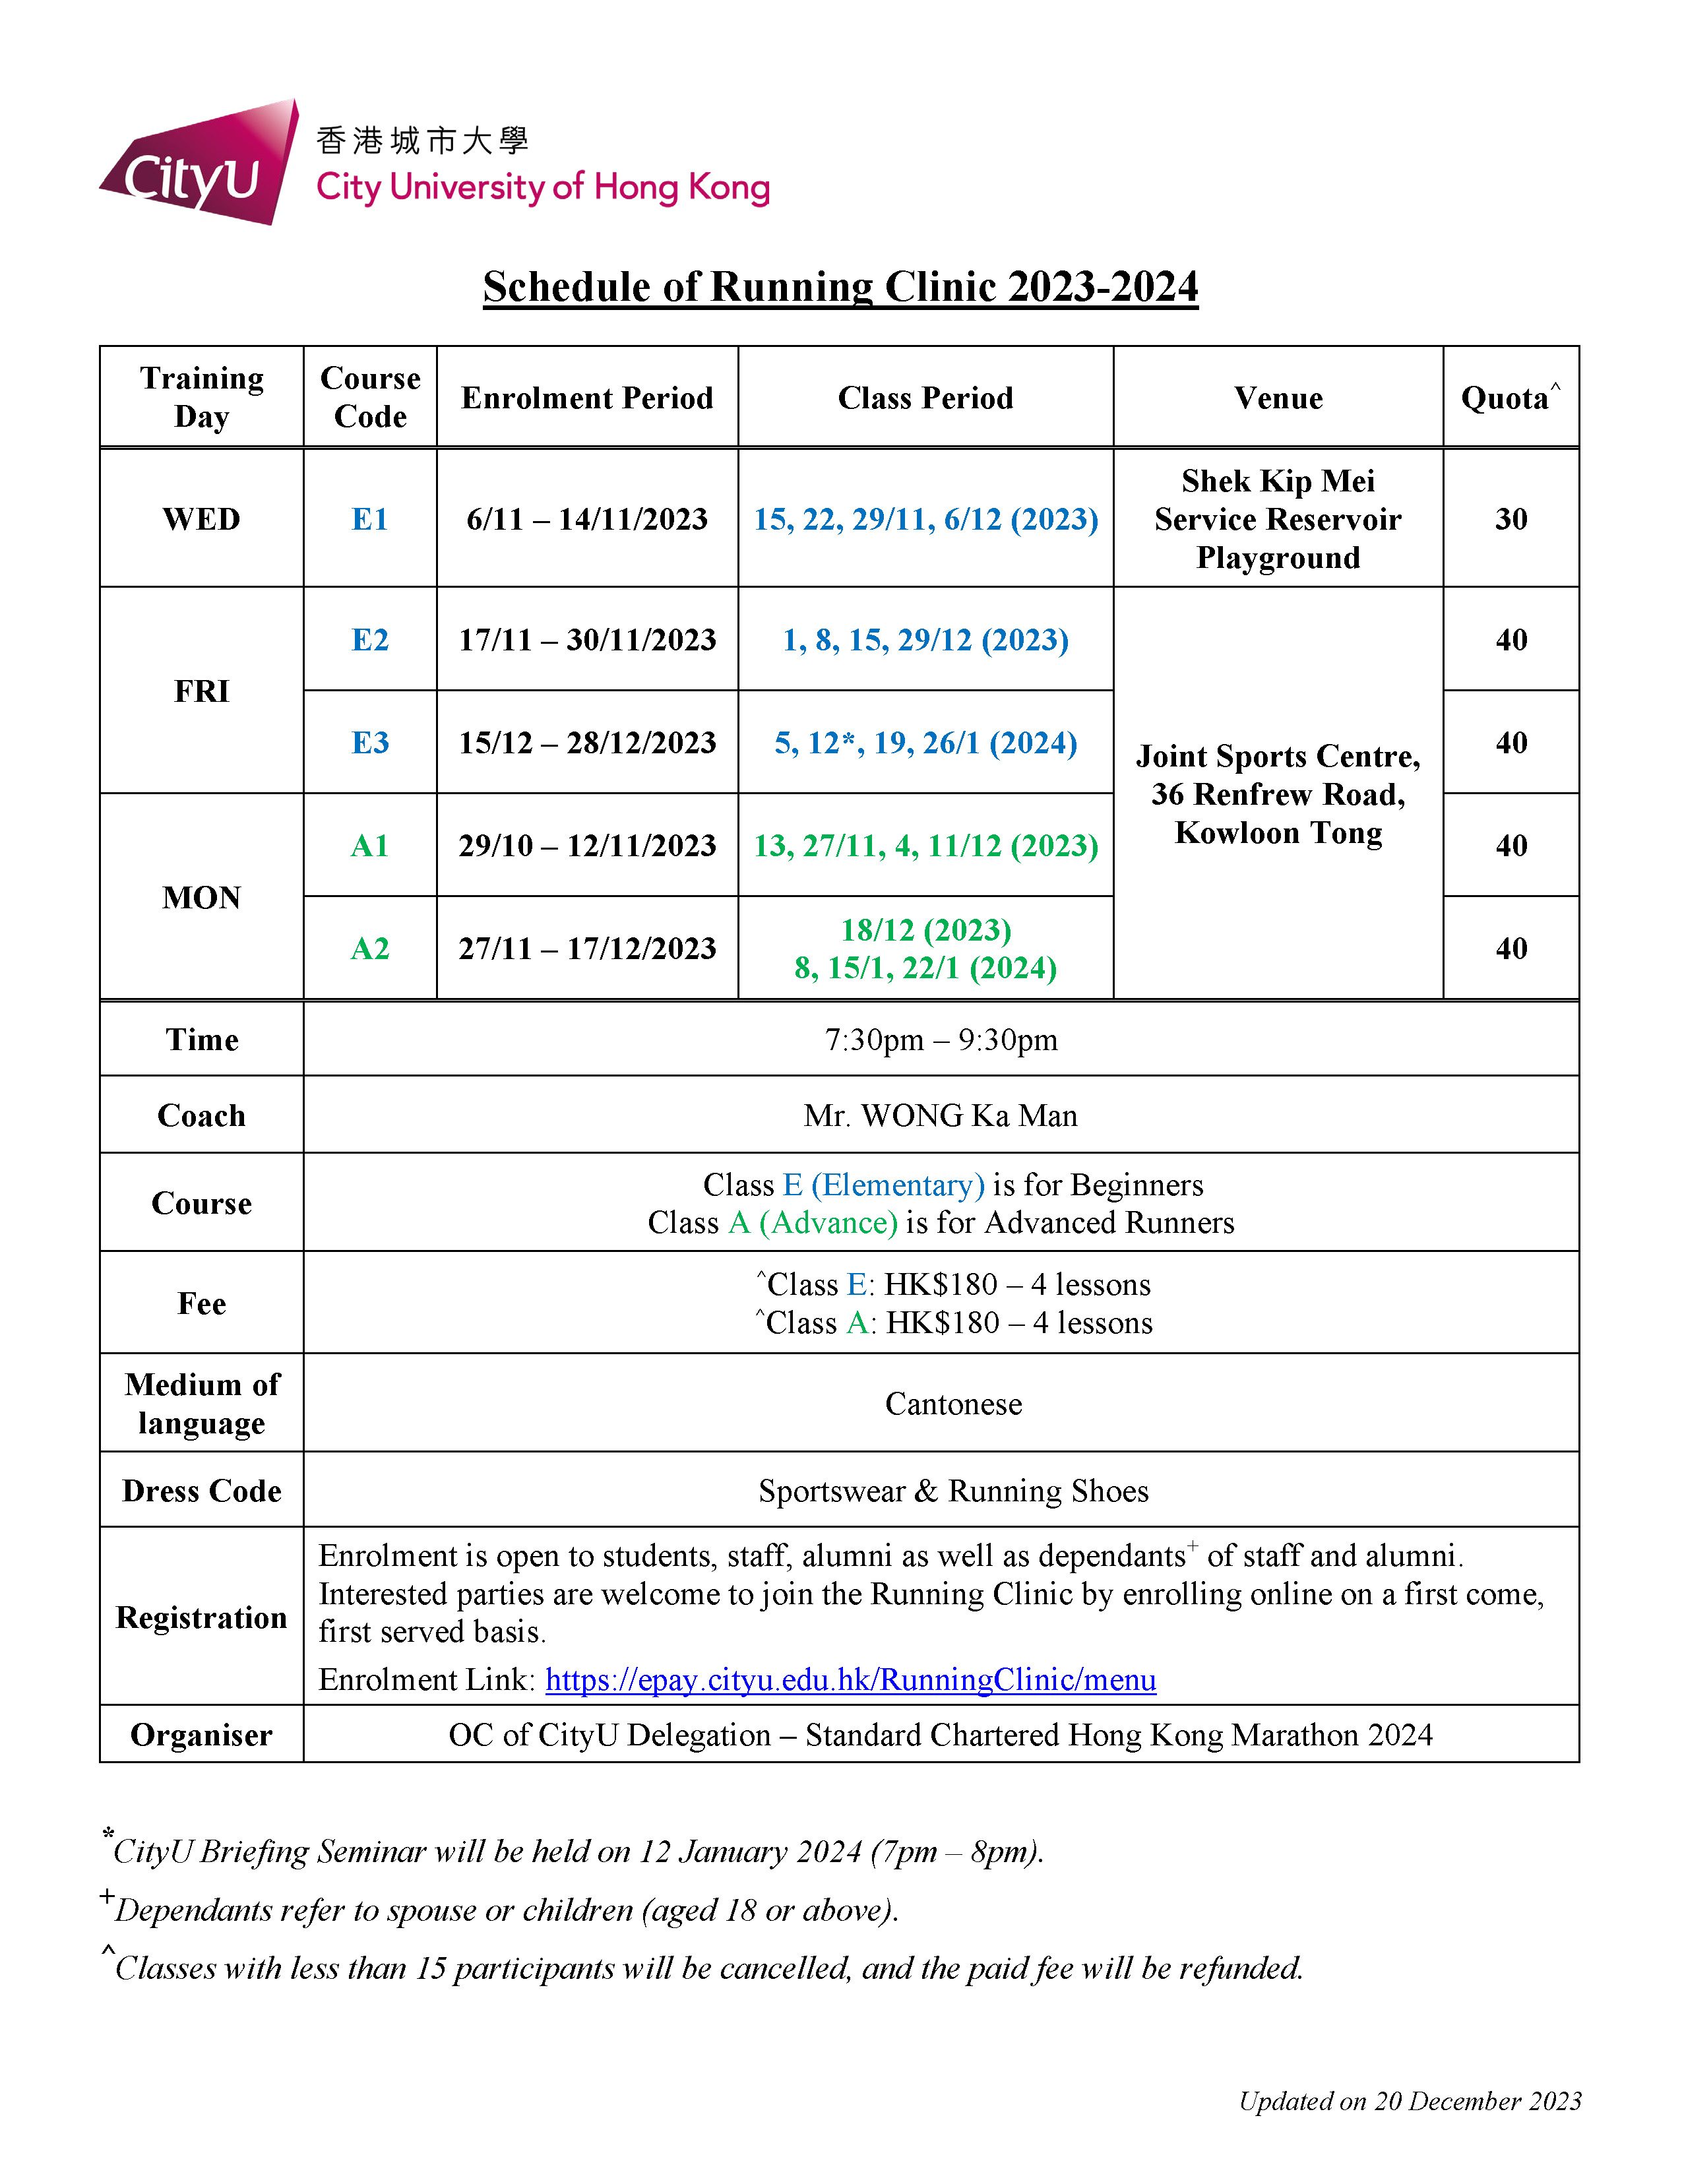 Schedule of Running Clinic 2023-2024 v6.1.jpg